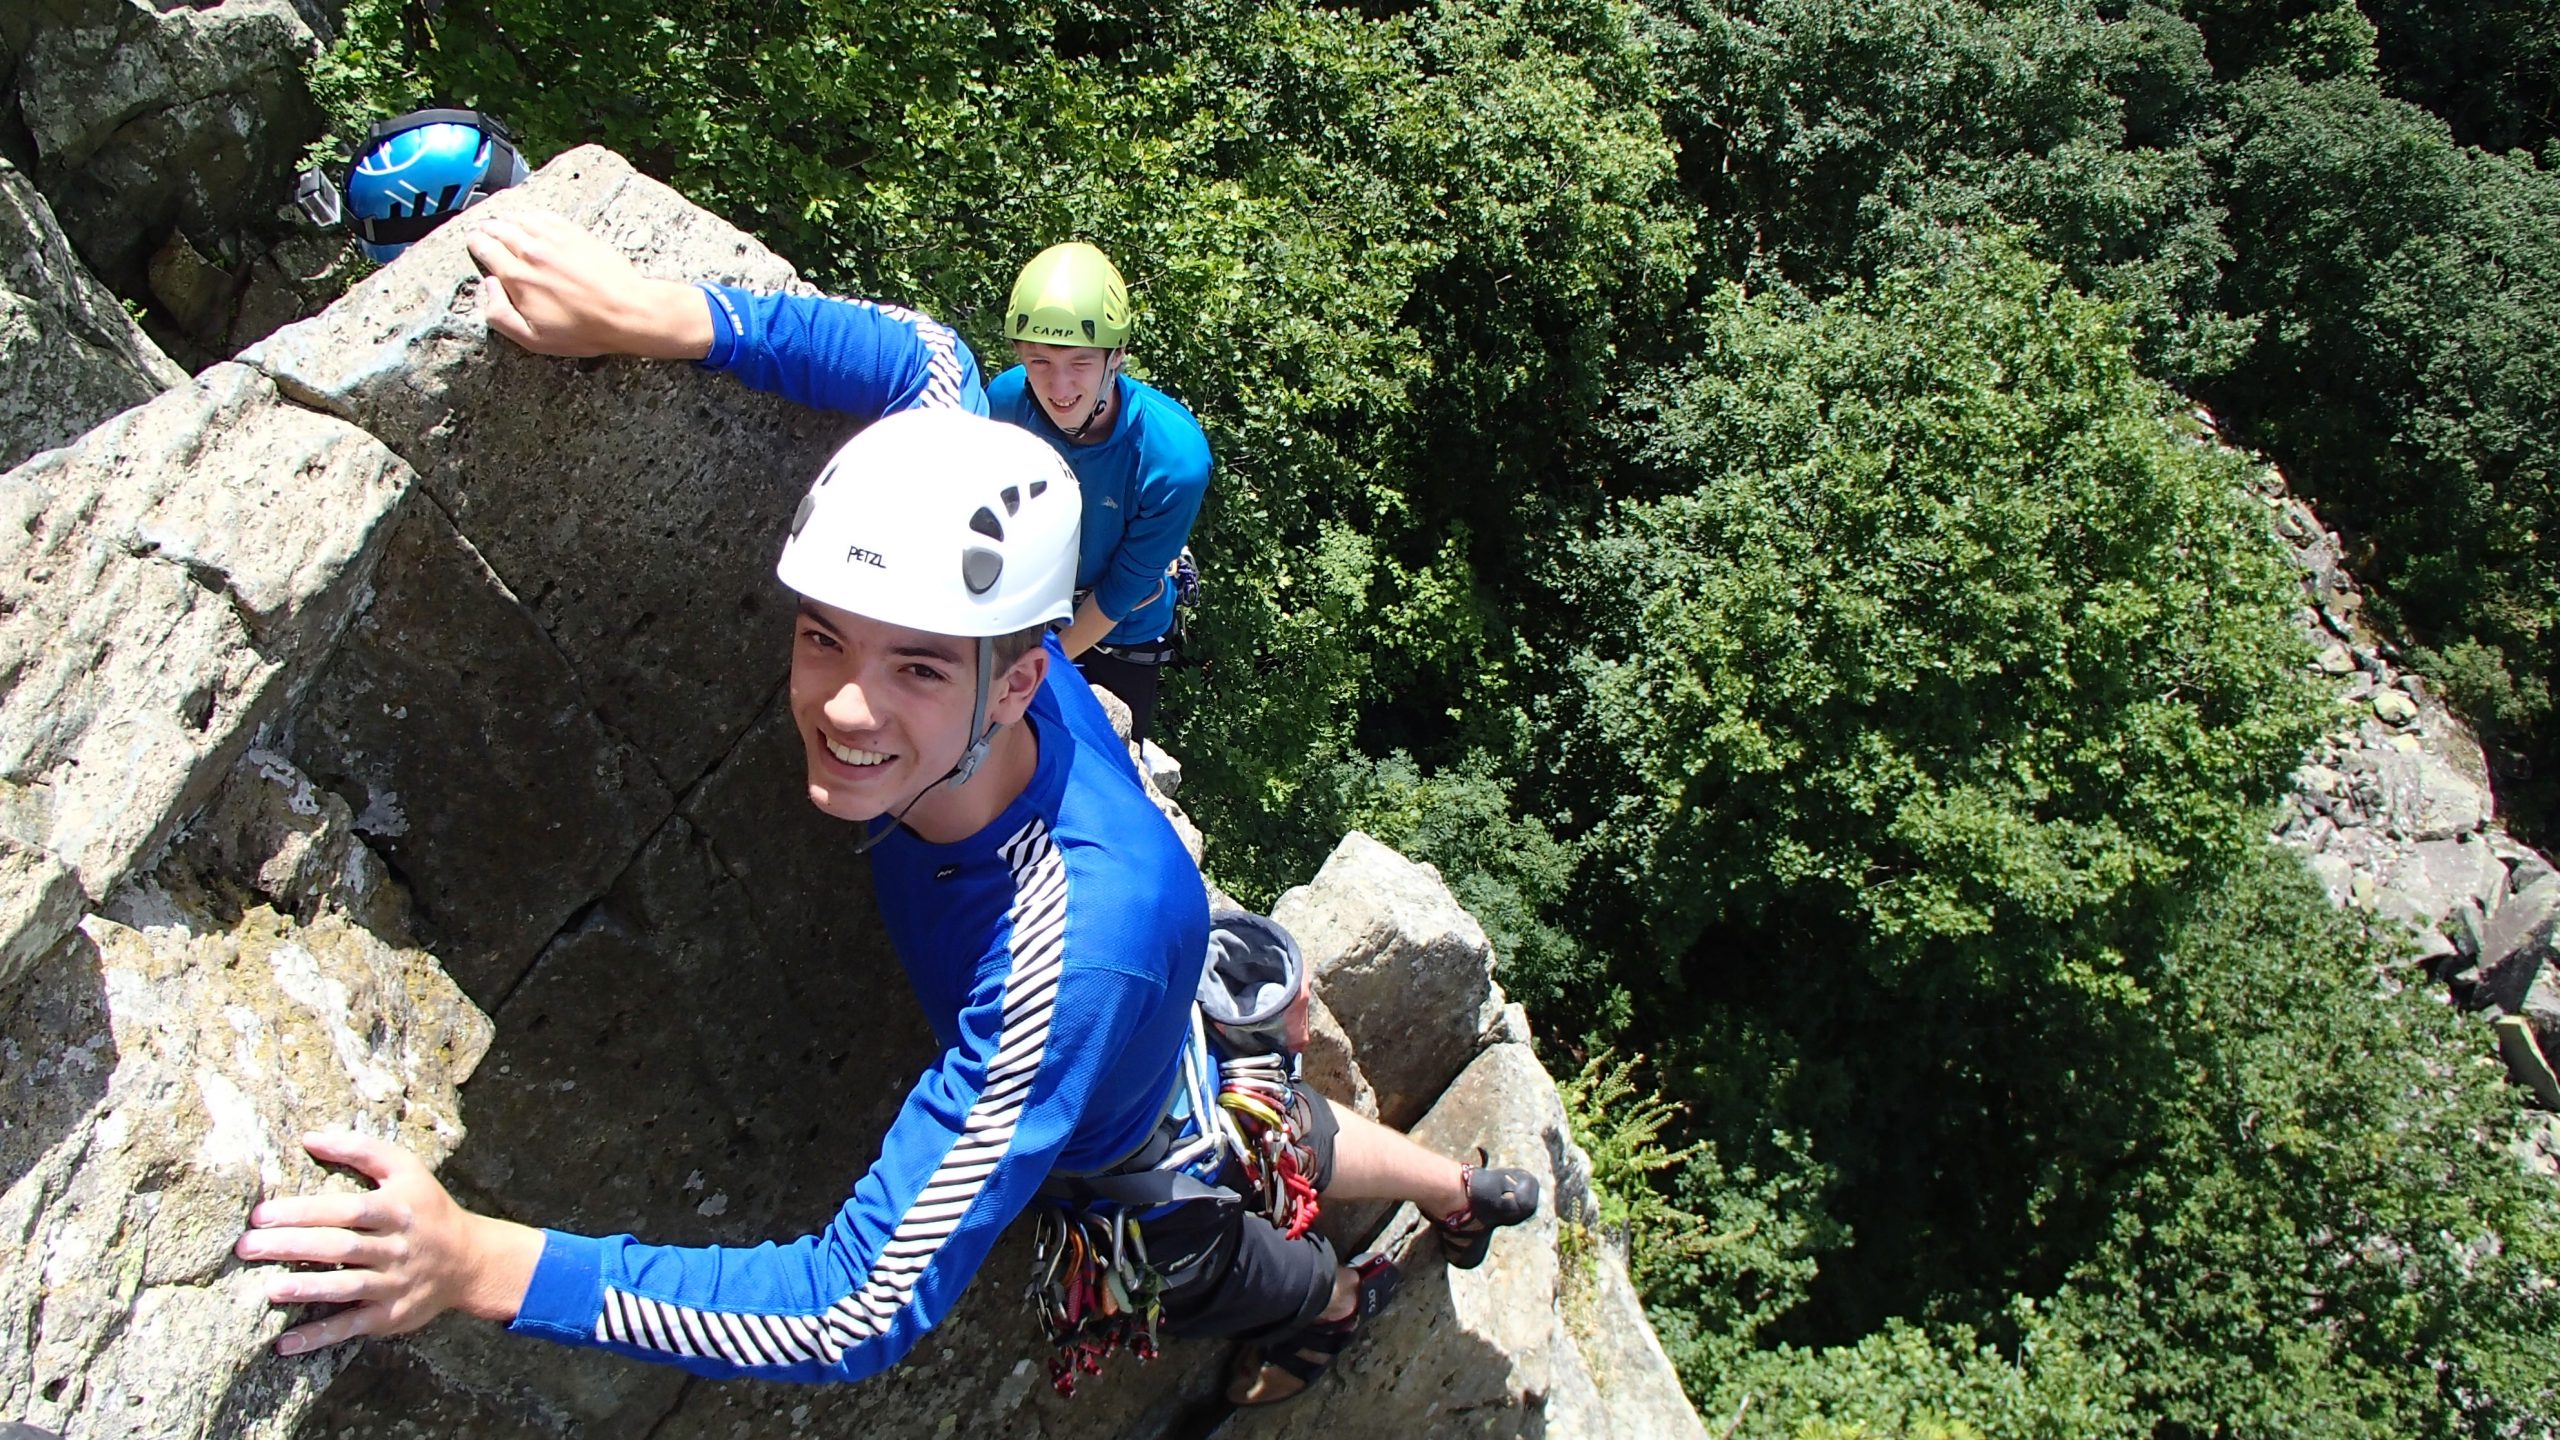 Classic rock climbing course Lake District